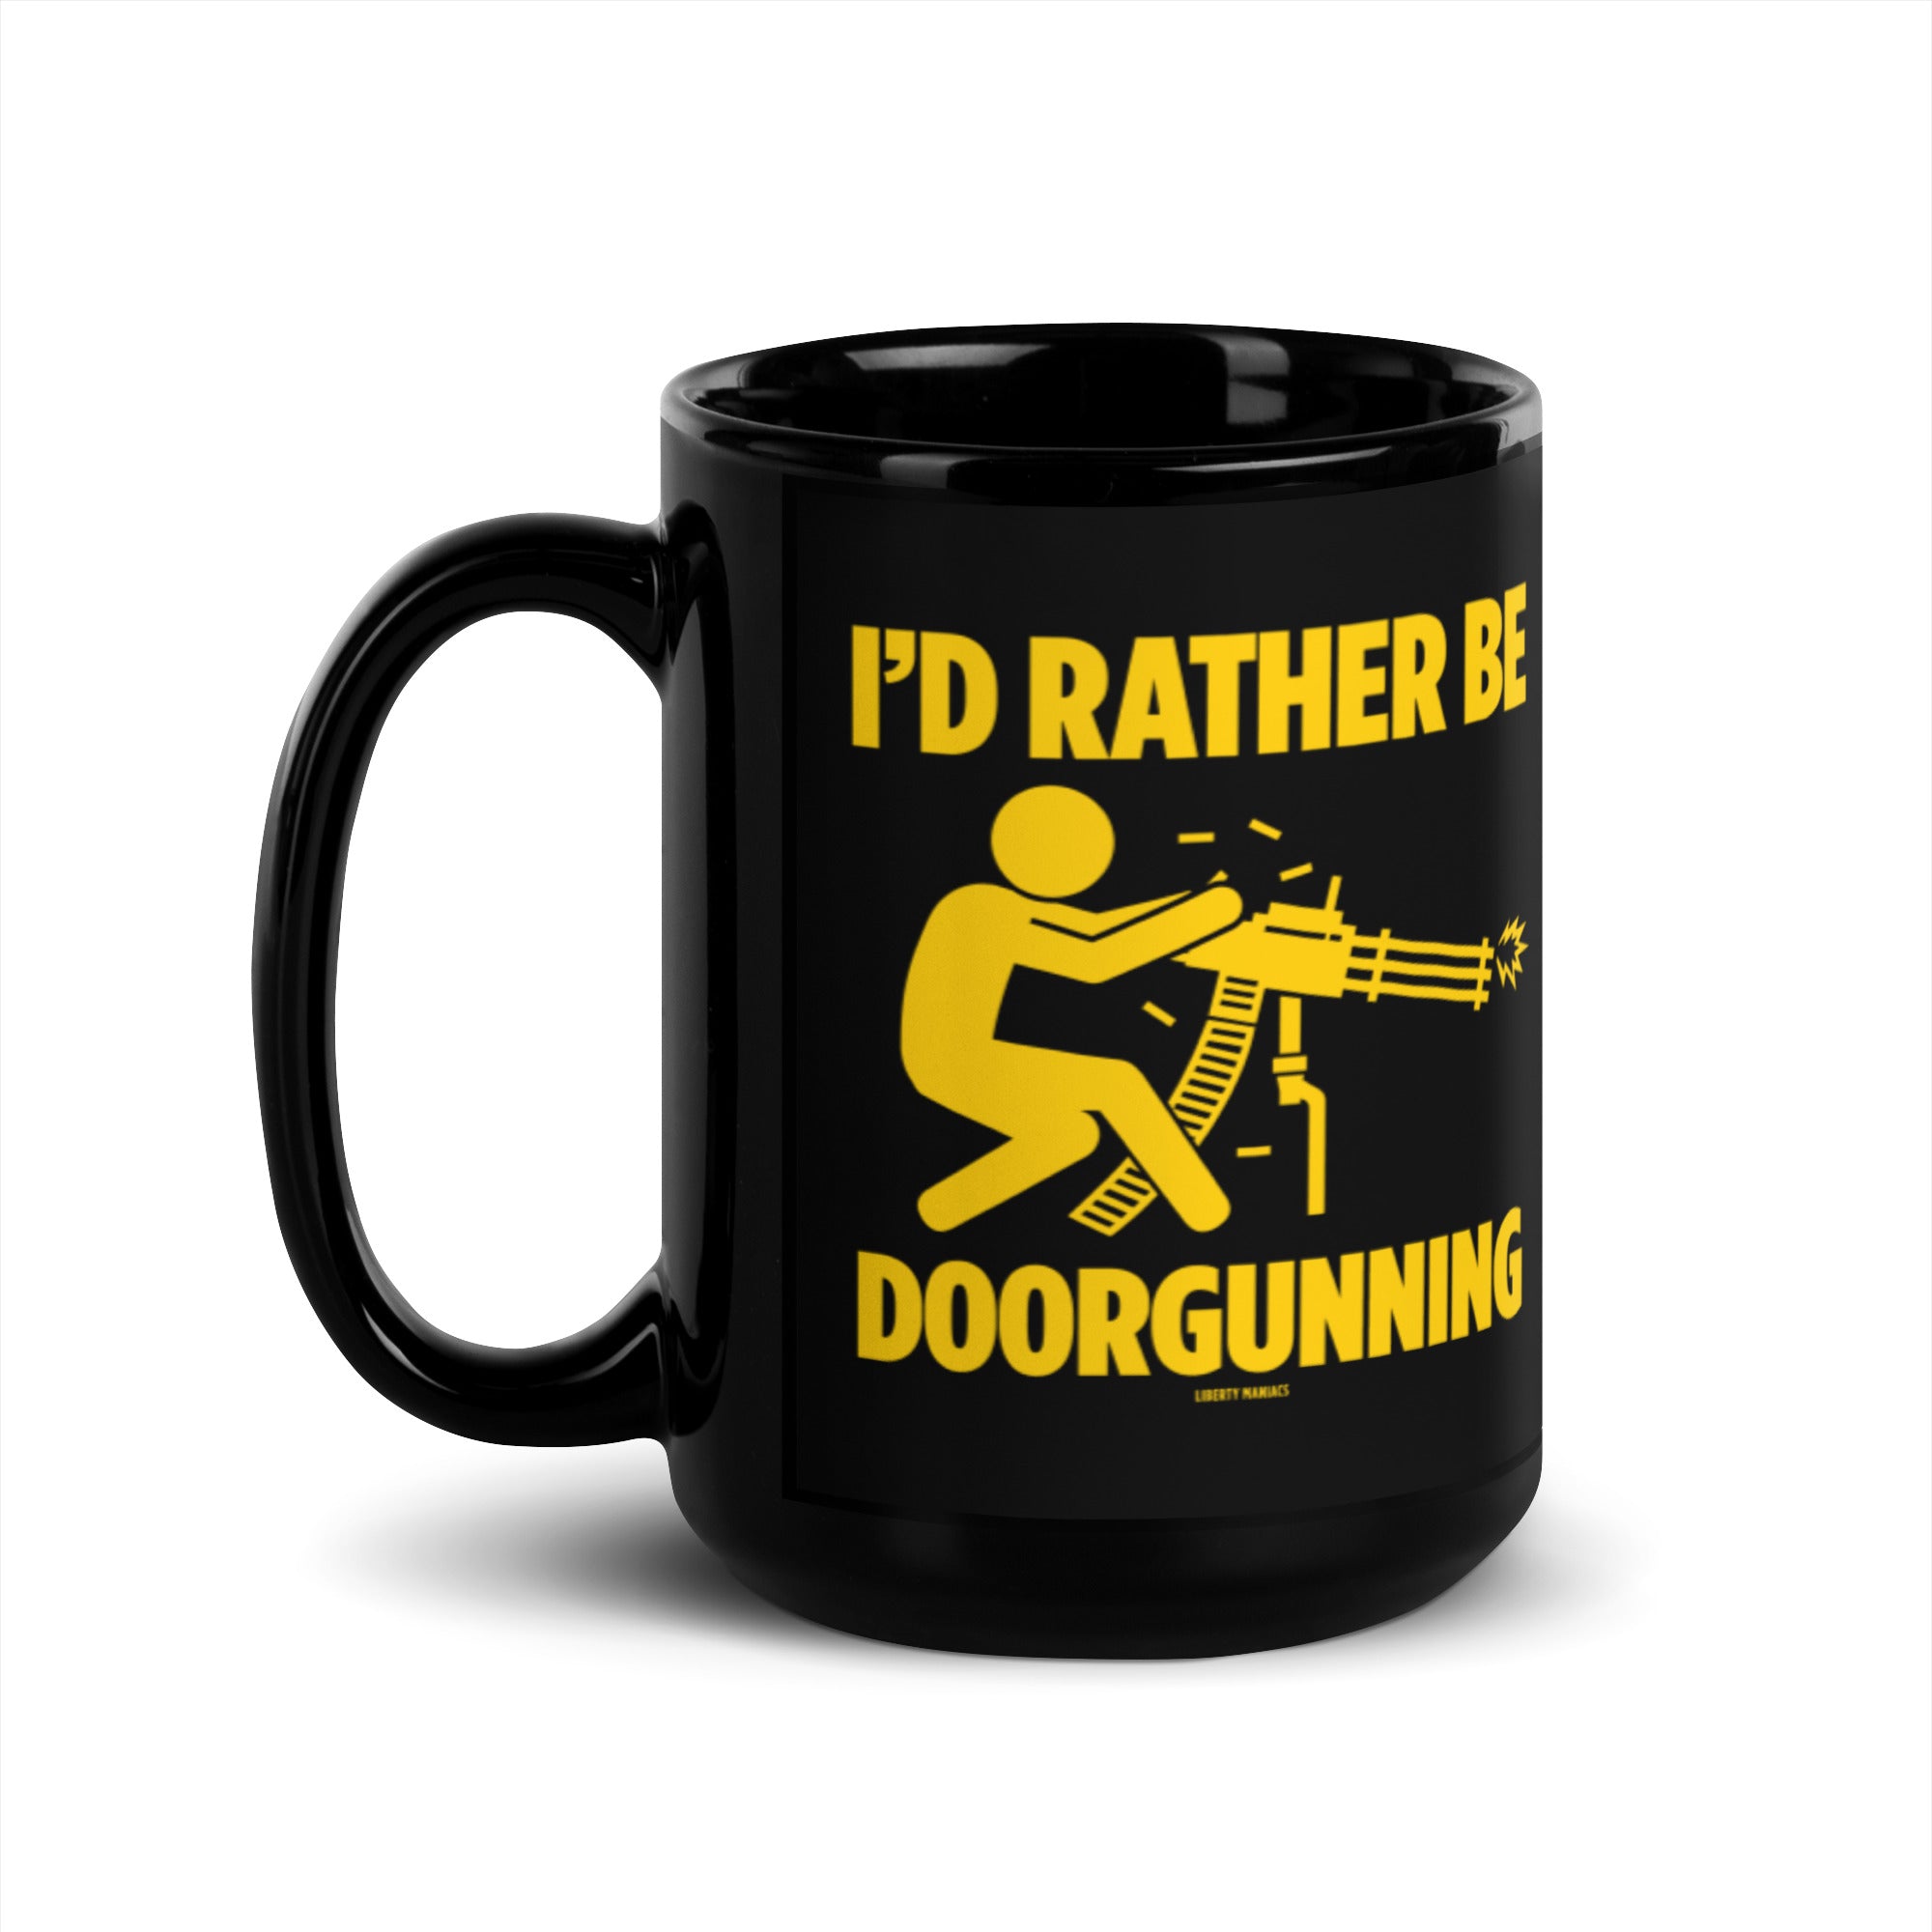 I'd Rather Be Door Gunning Mug